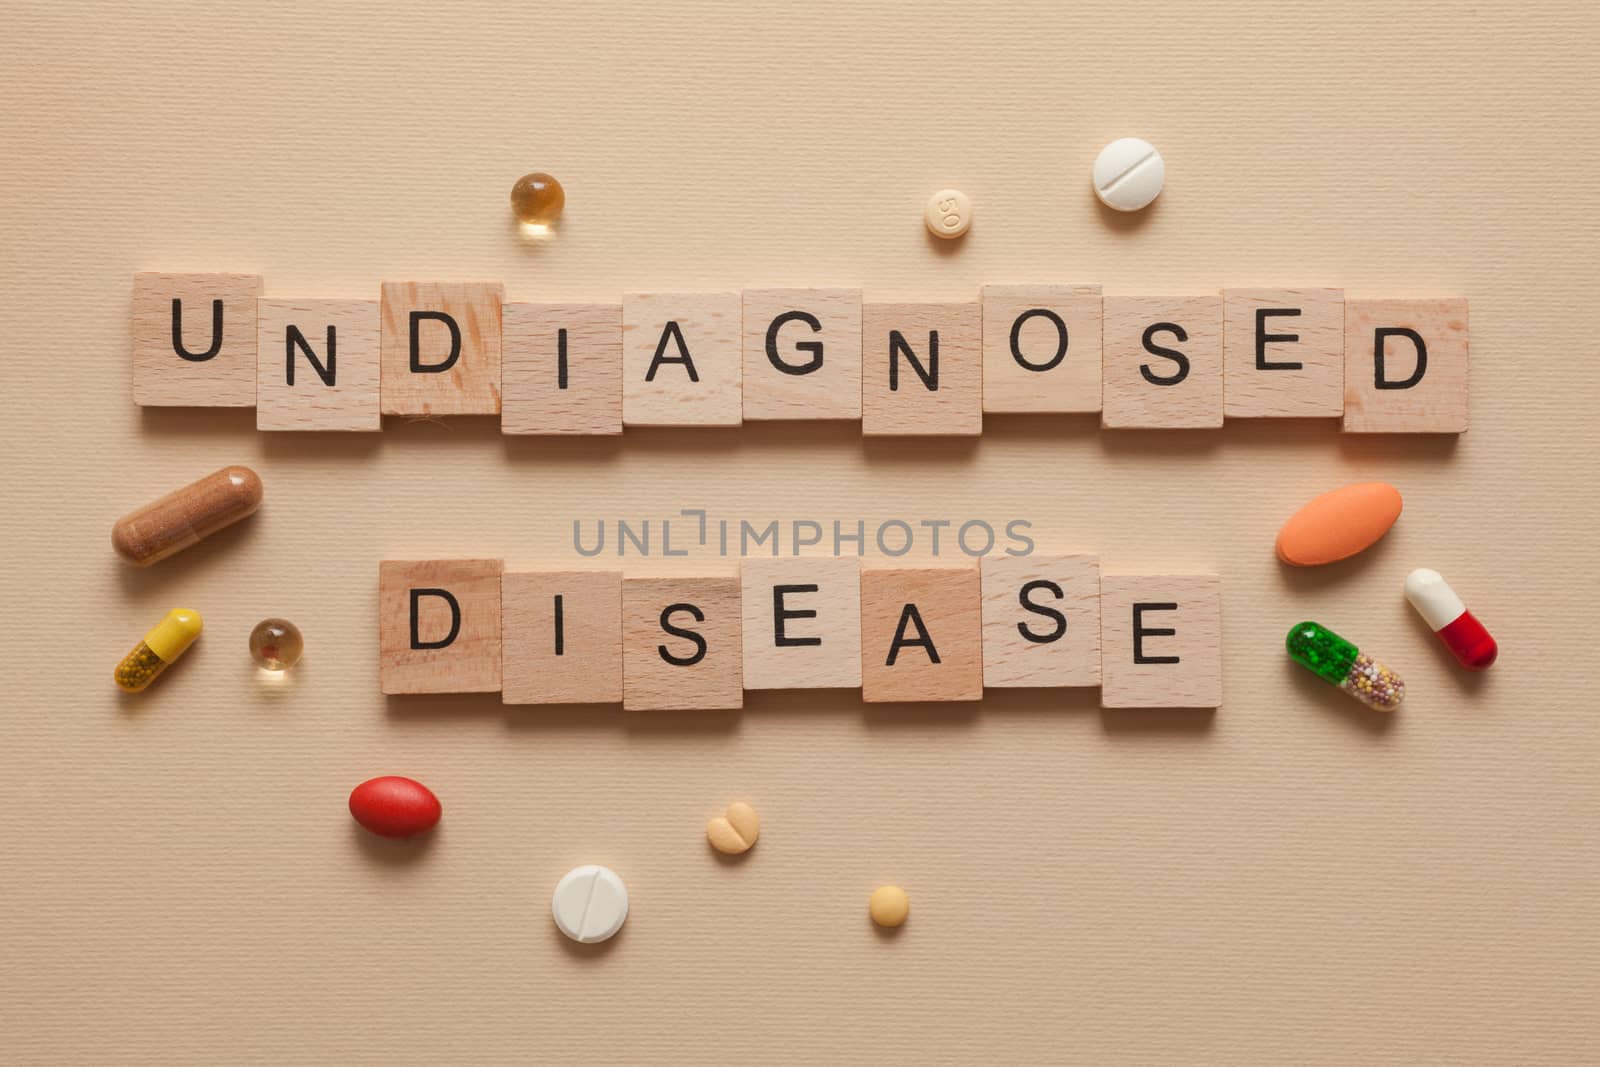 Undiagnosed disease by Portokalis